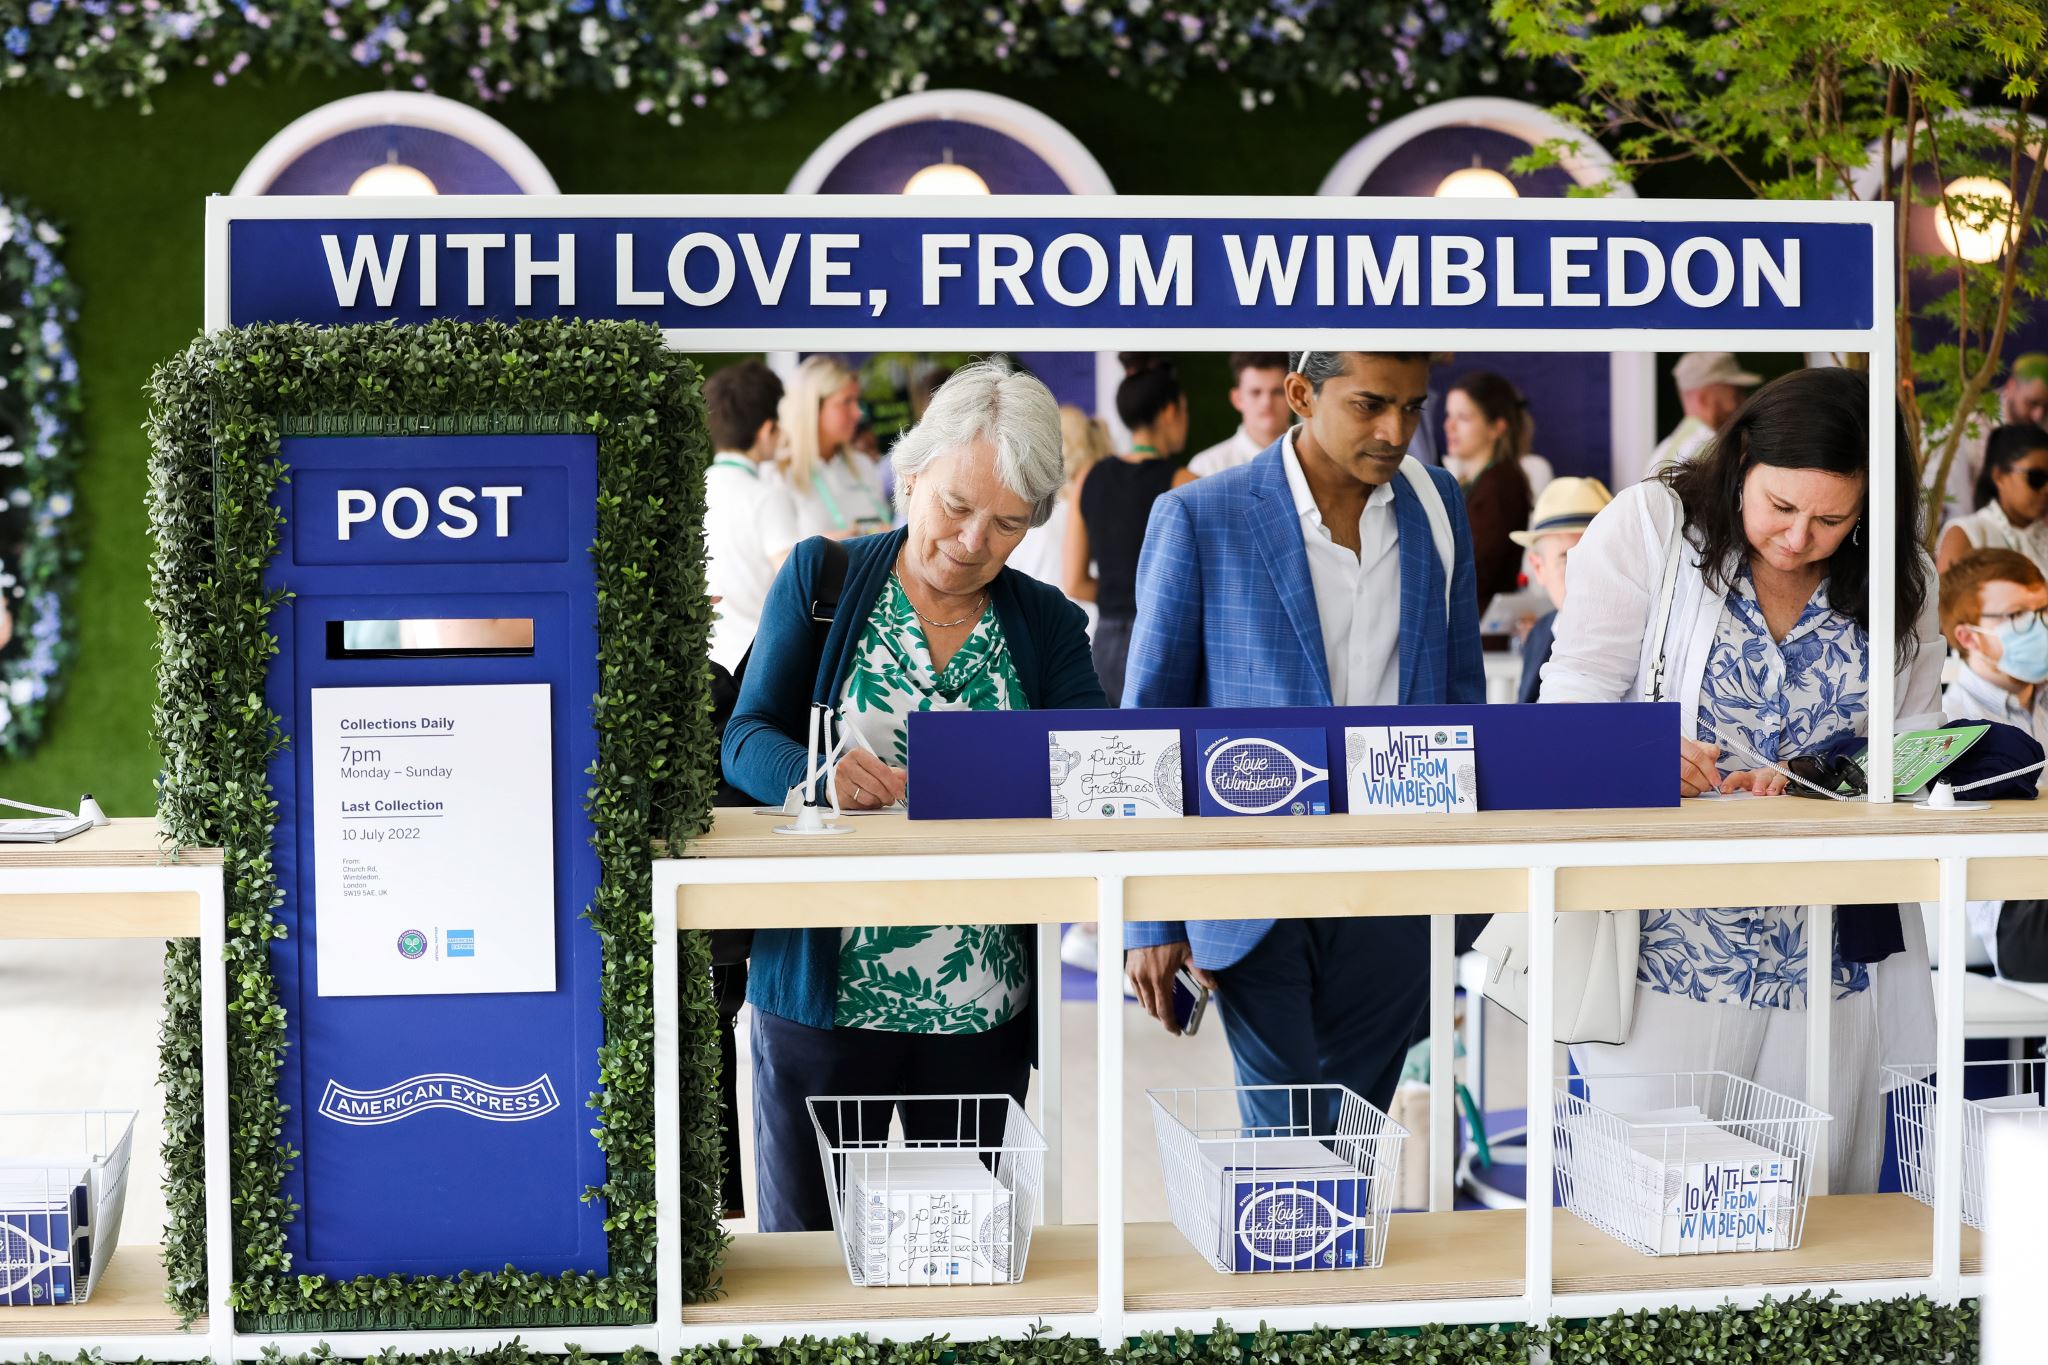 People attending the Wimbledon tennis tournament